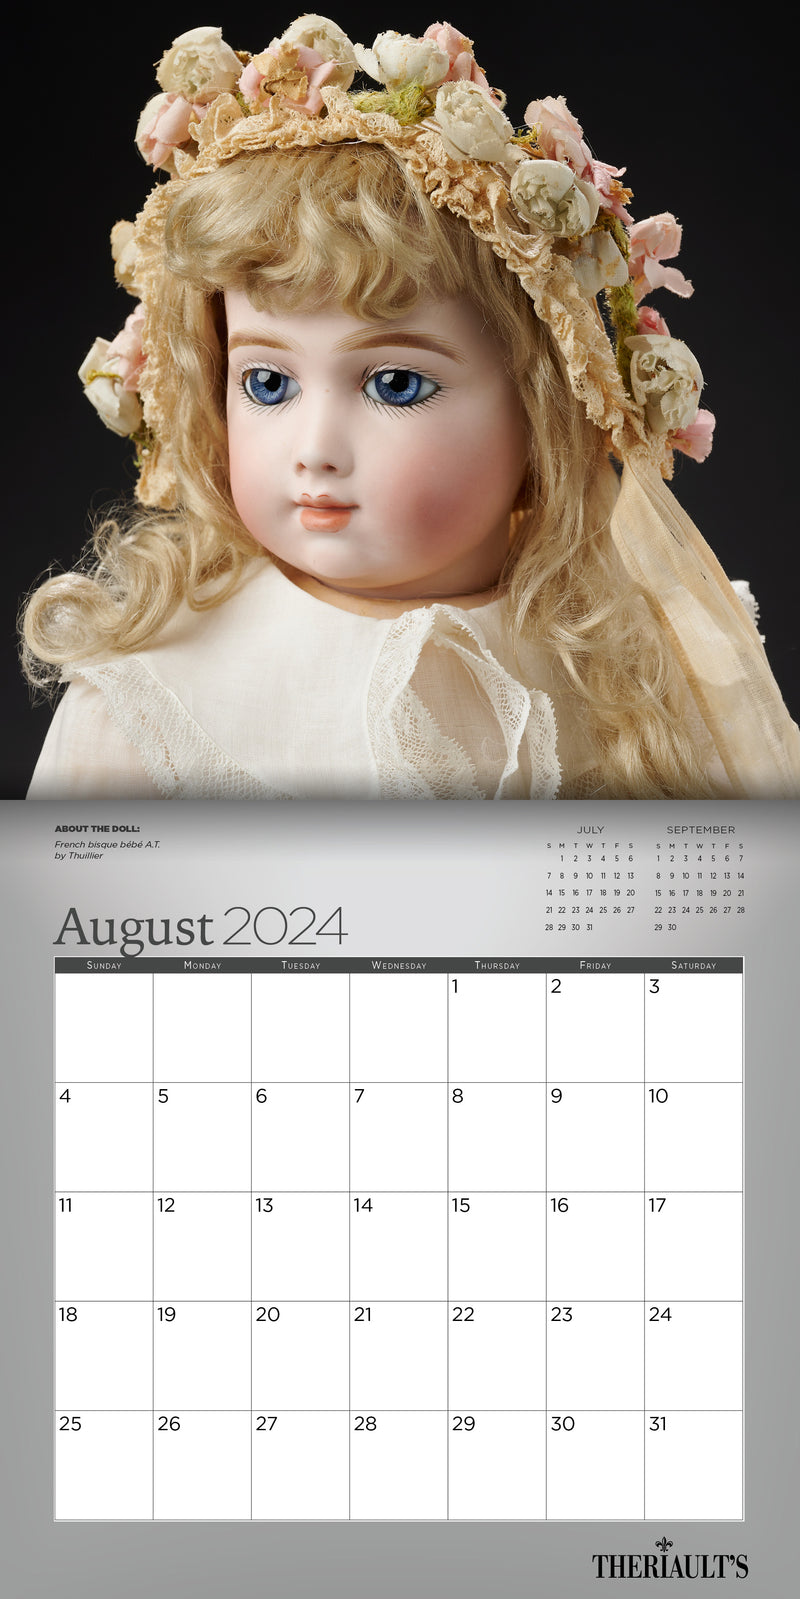 2024 Calendar of Dolls